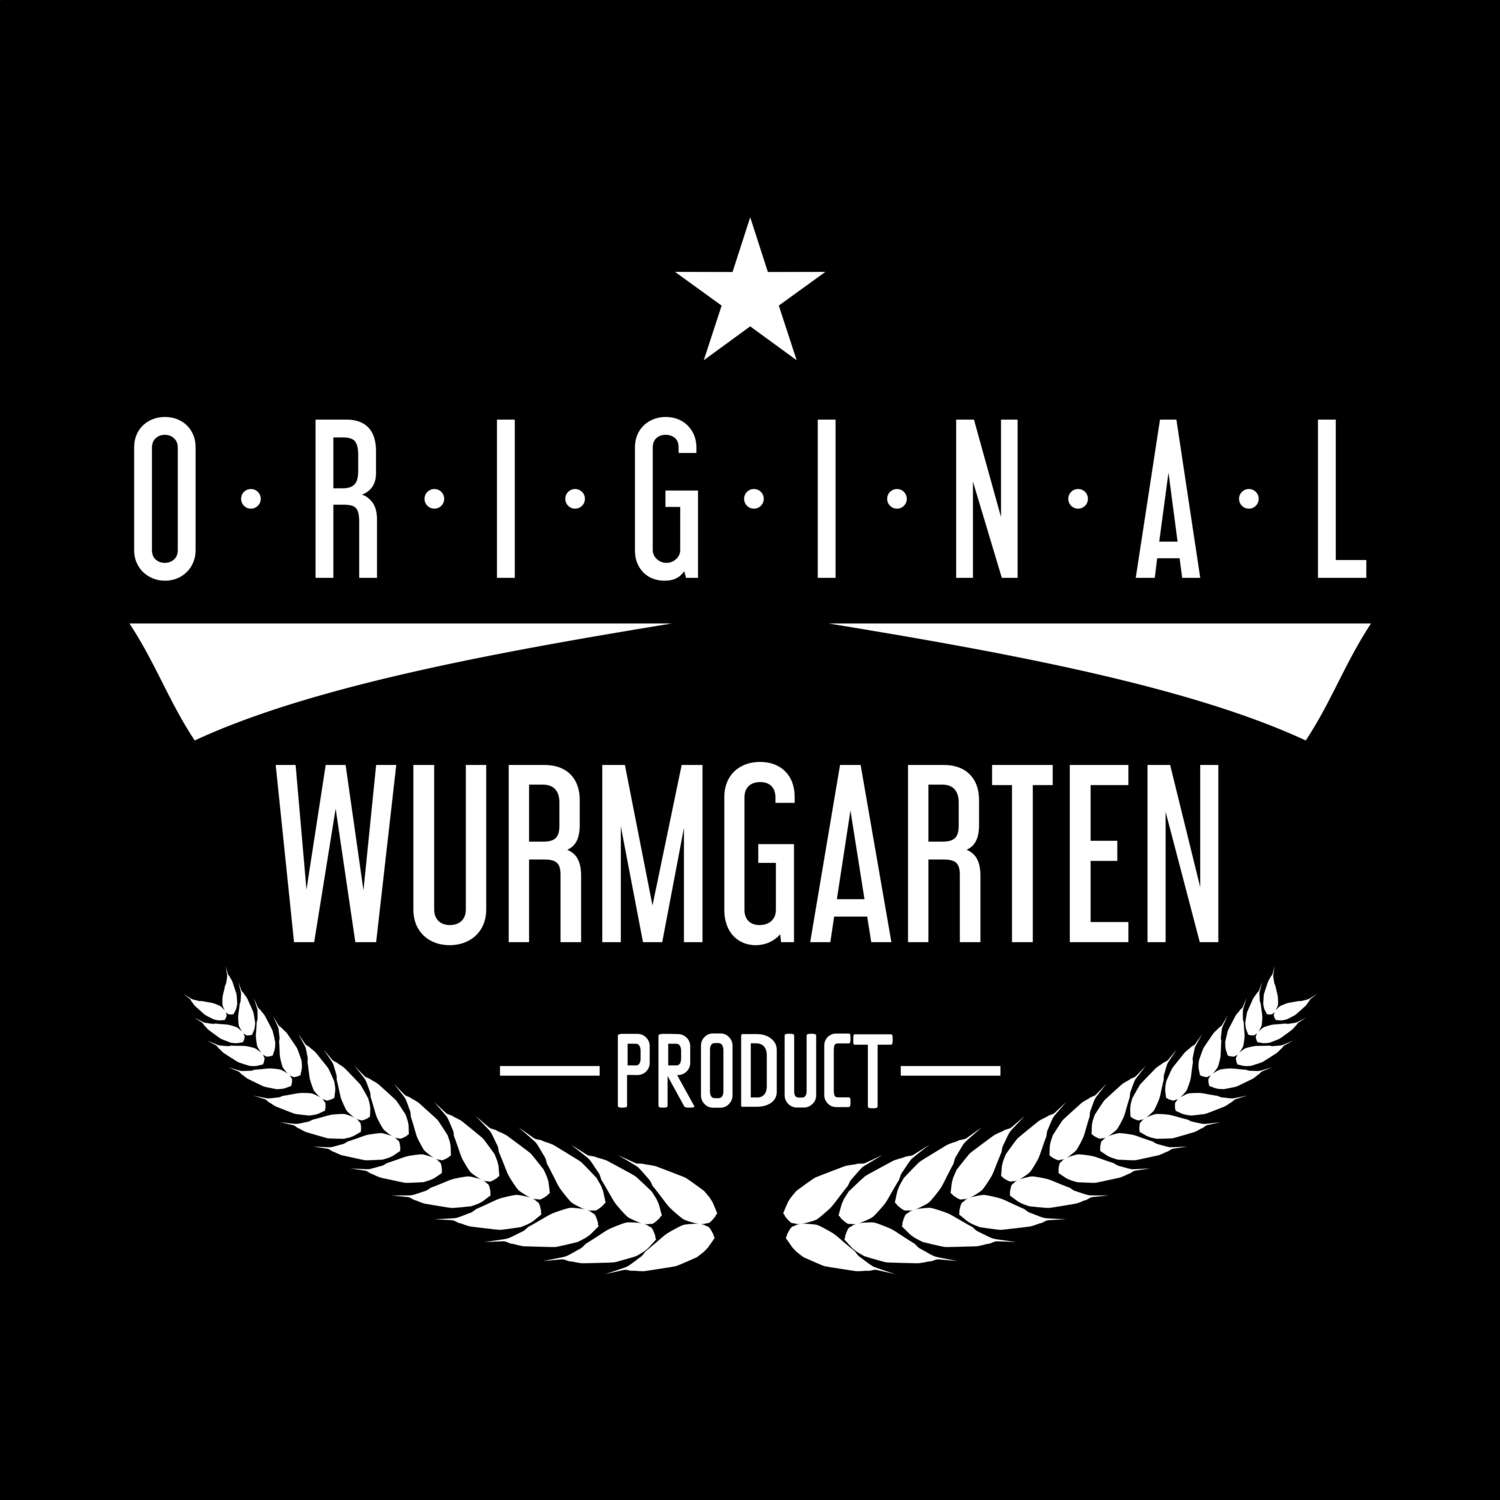 Wurmgarten T-Shirt »Original Product«